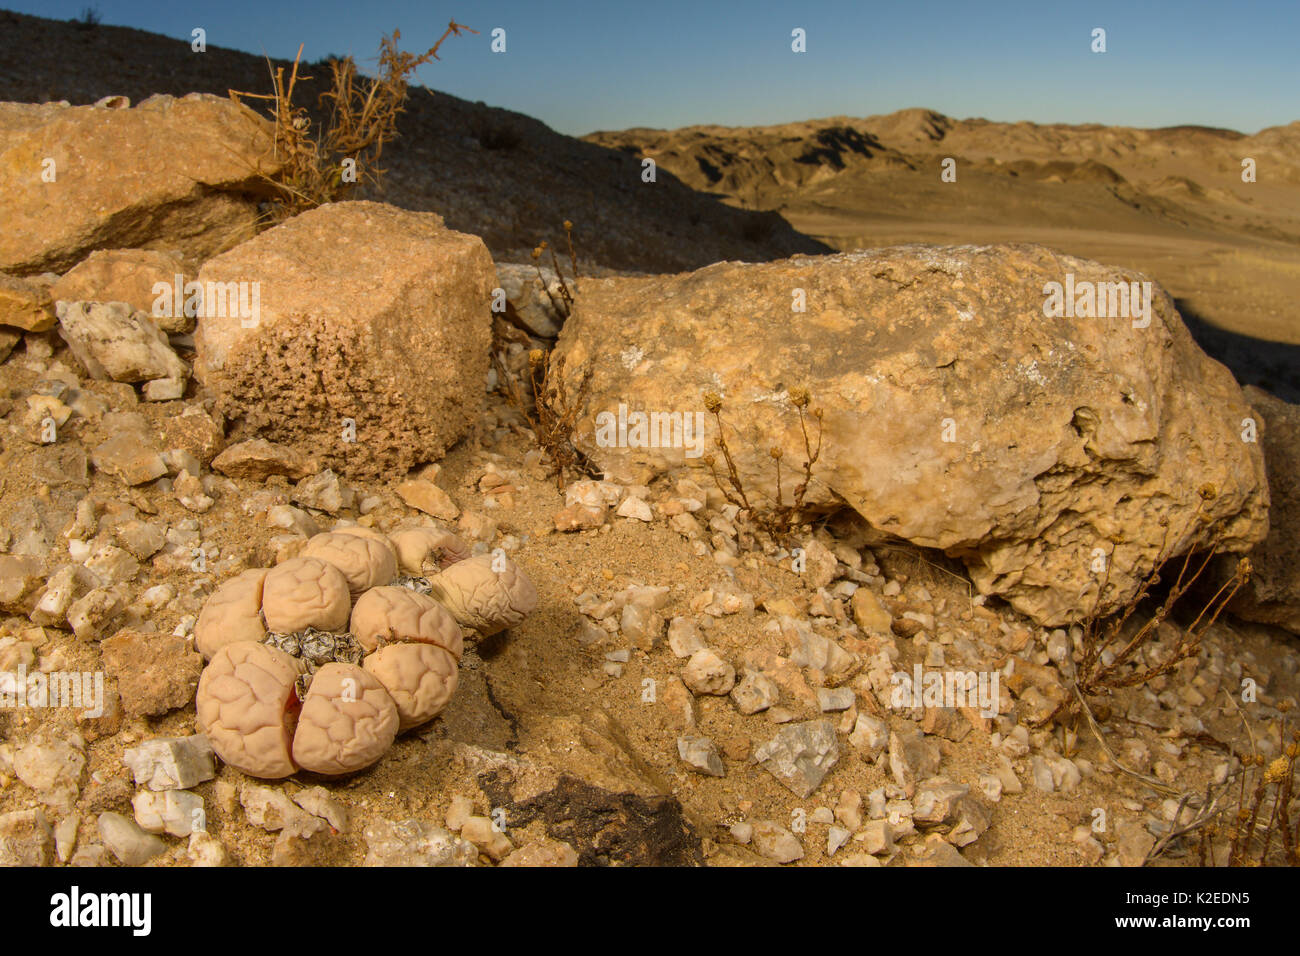 Stone plant (Lithops gracilidentata) in desert habitat, Namibia Stock Photo